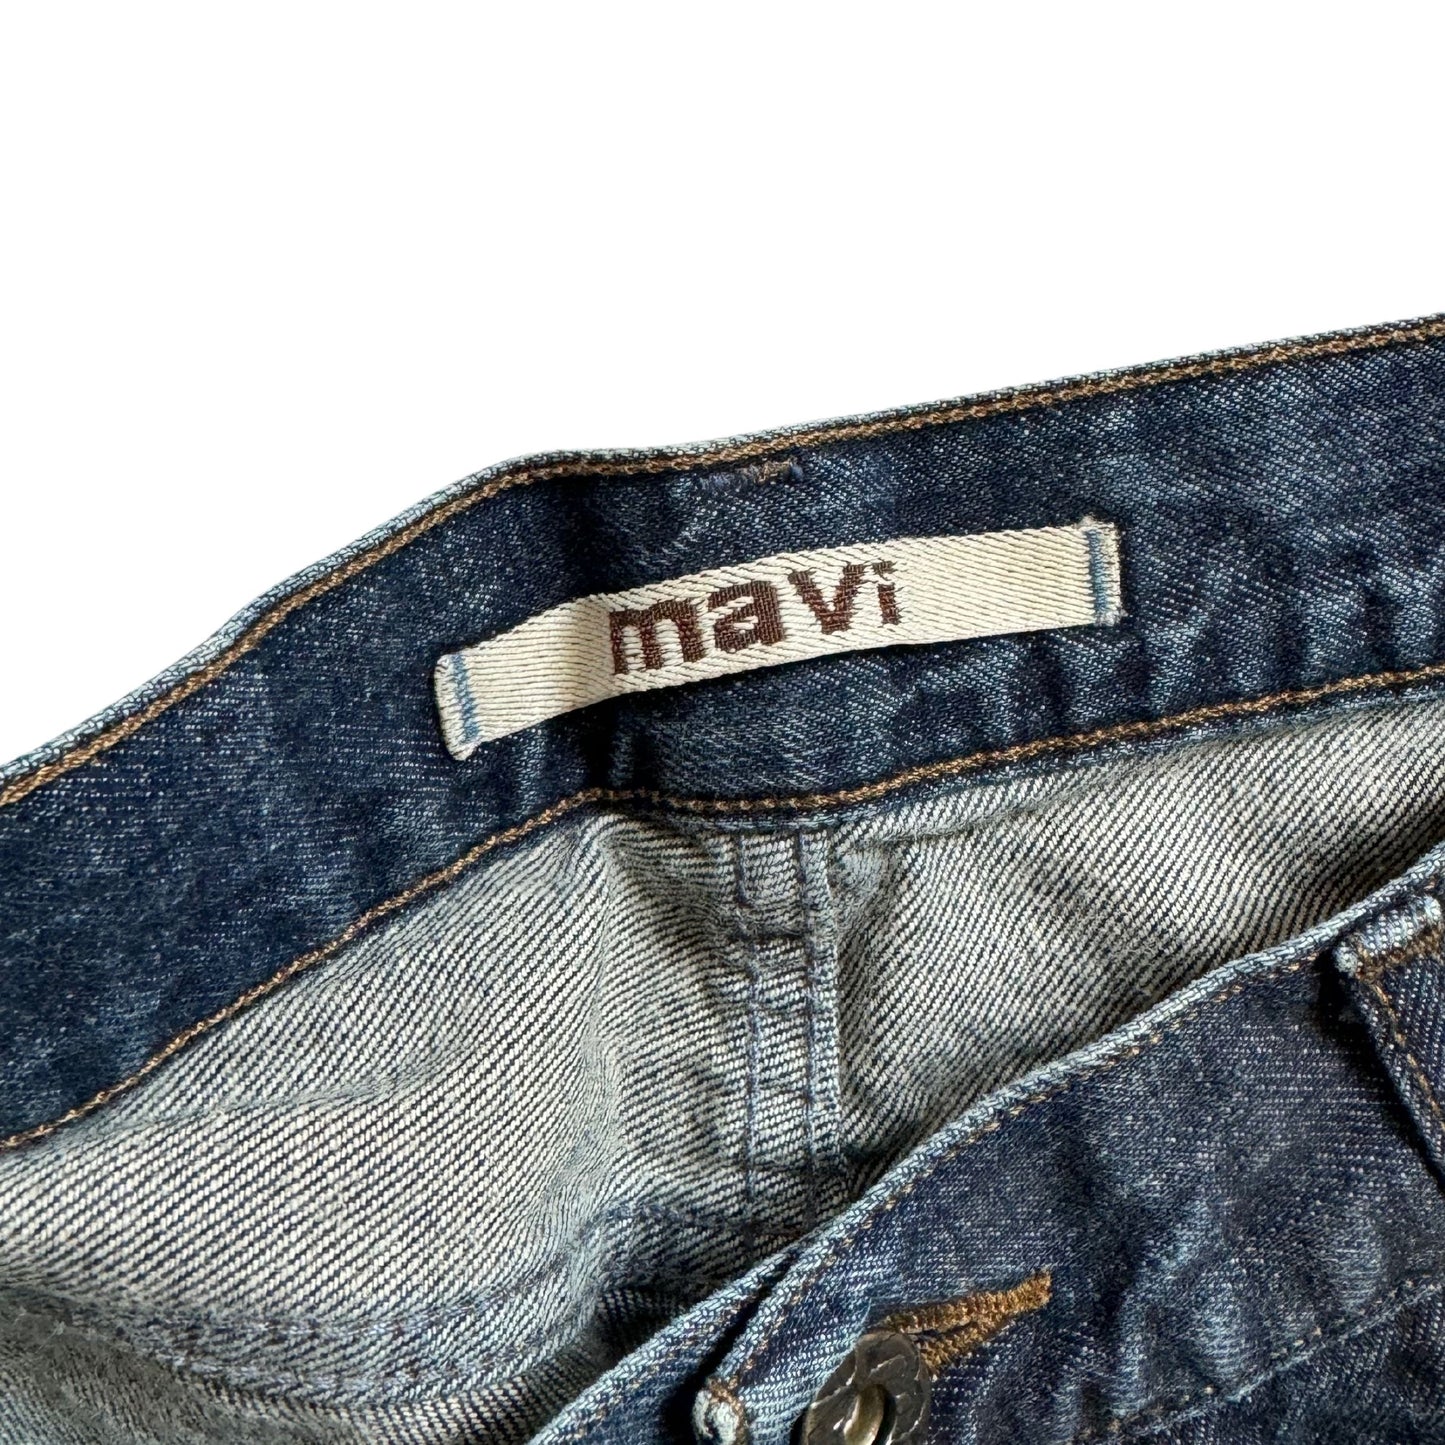 Vintage 2000s Y2k Mavi Washed Boot Cut Jeans